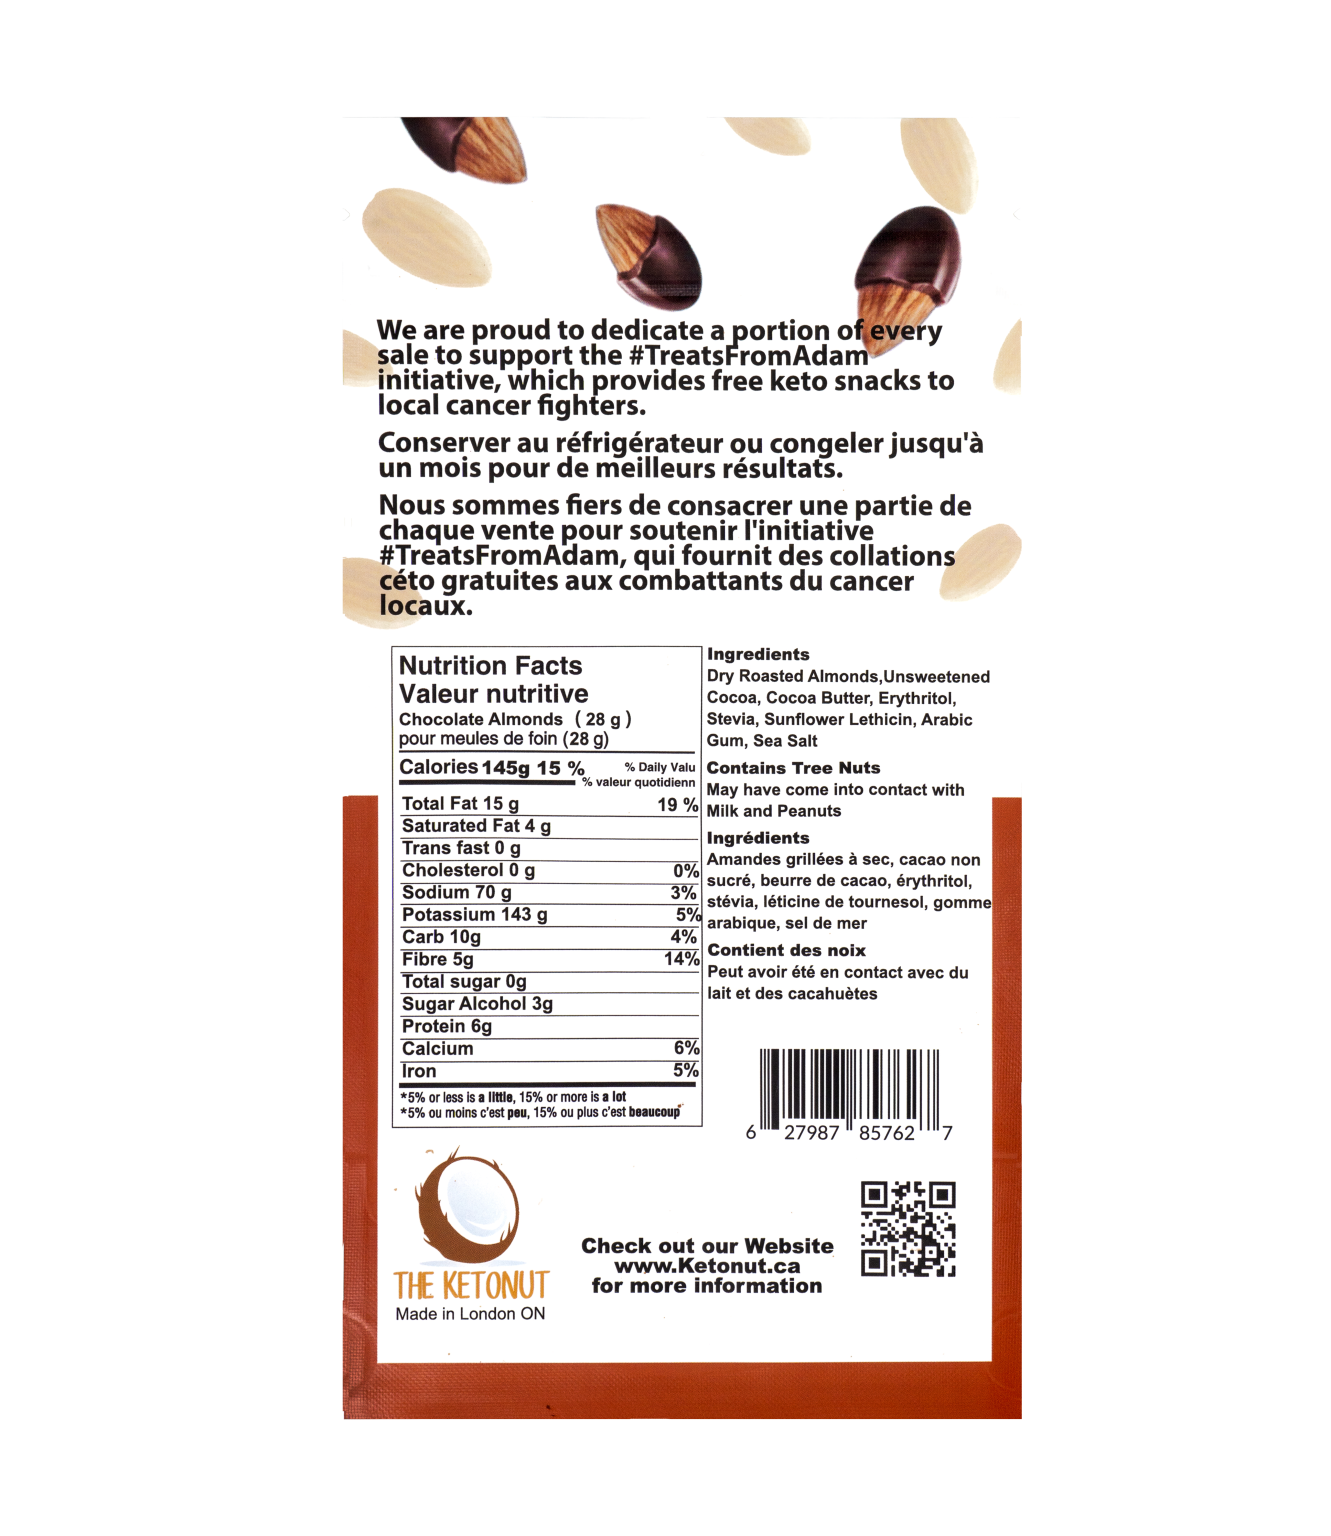 Chocolate Salted Almonds- Keto